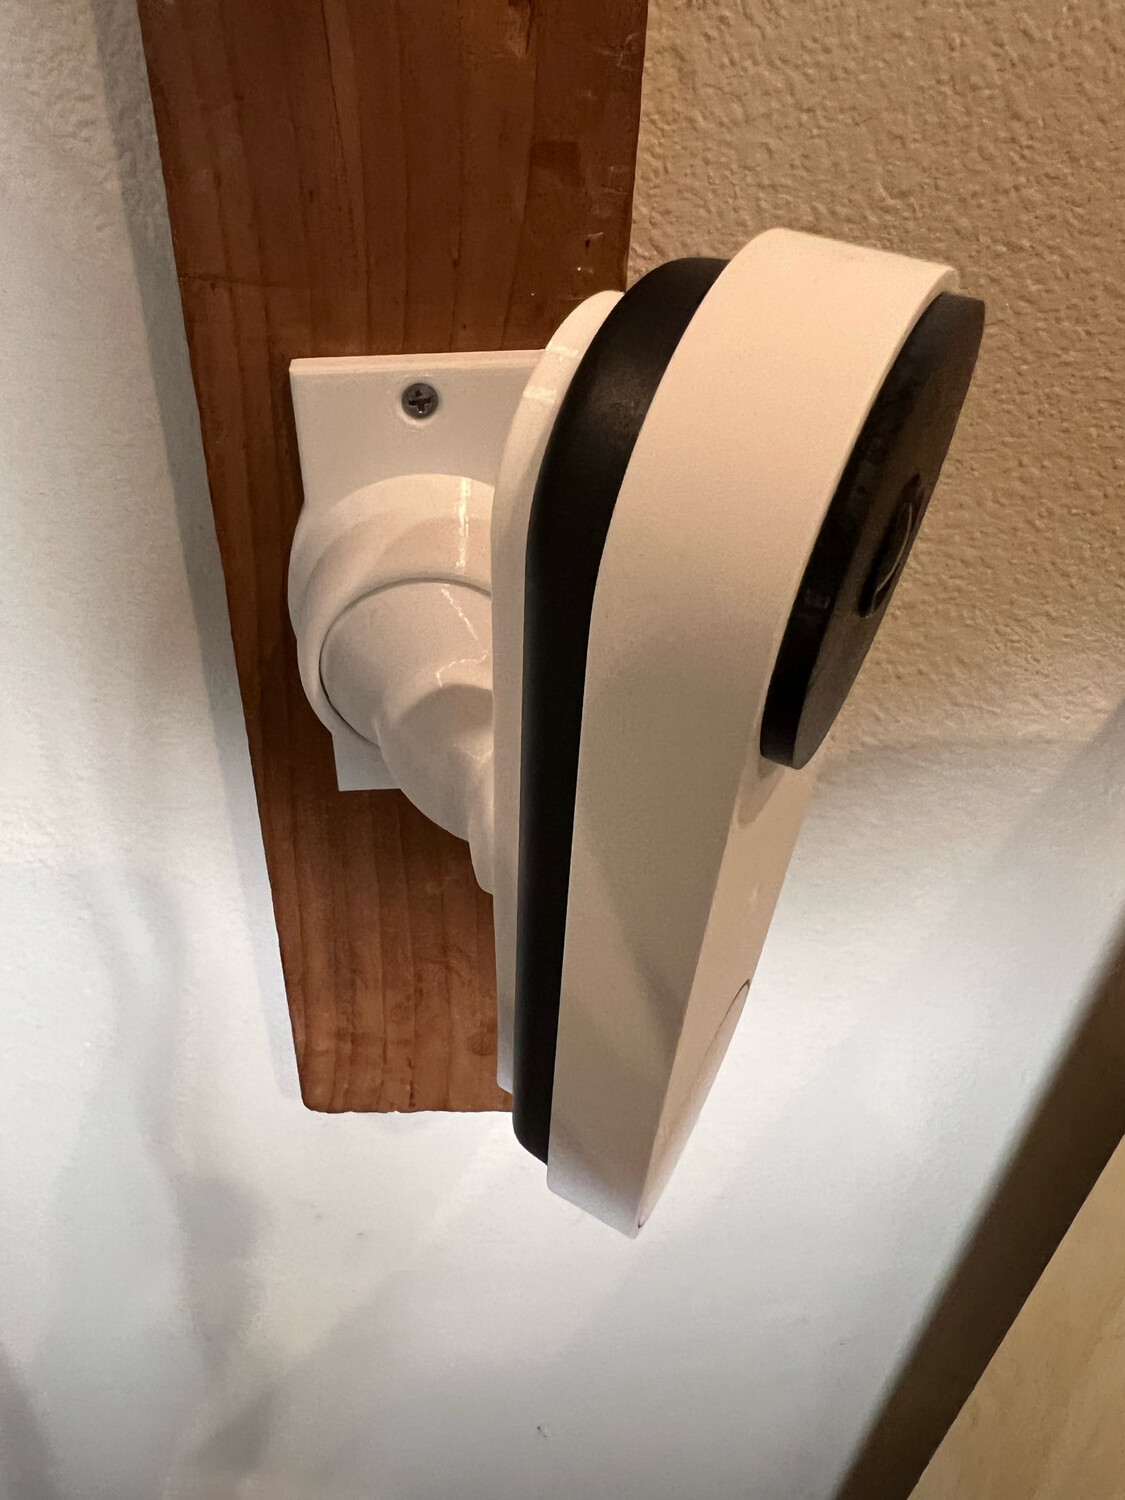 Google Wired Generation 2 Doorbell 90 Degree Swivel Tilting Mount Adjustable